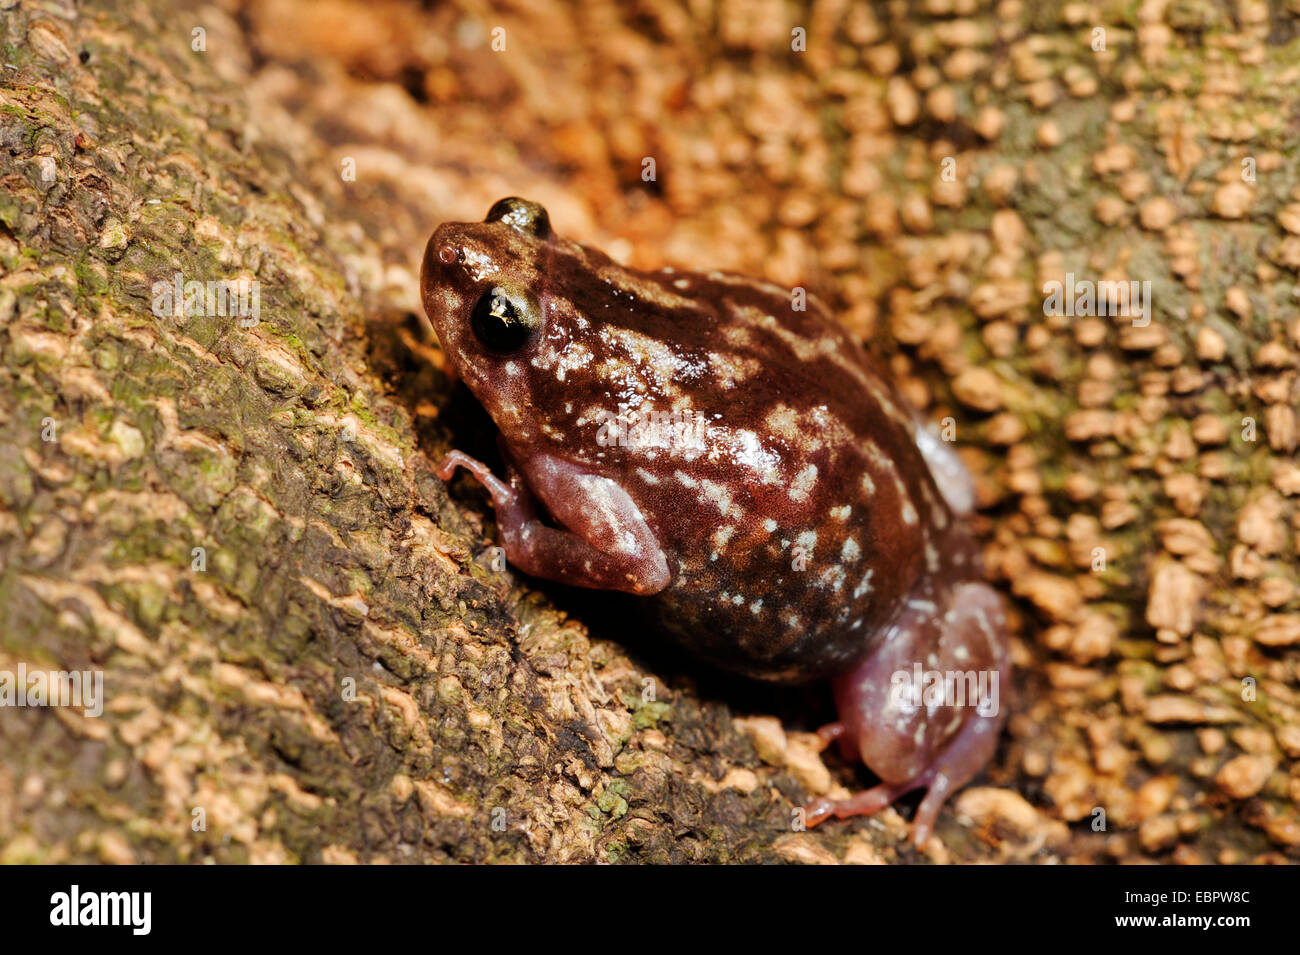 Termite nest frog, Variable ramanella, White-bellied pug snout frog (Ramanella cf. variegata), creeping on the ground, Sri Lanka, Sinharaja Forest National Park Stock Photo